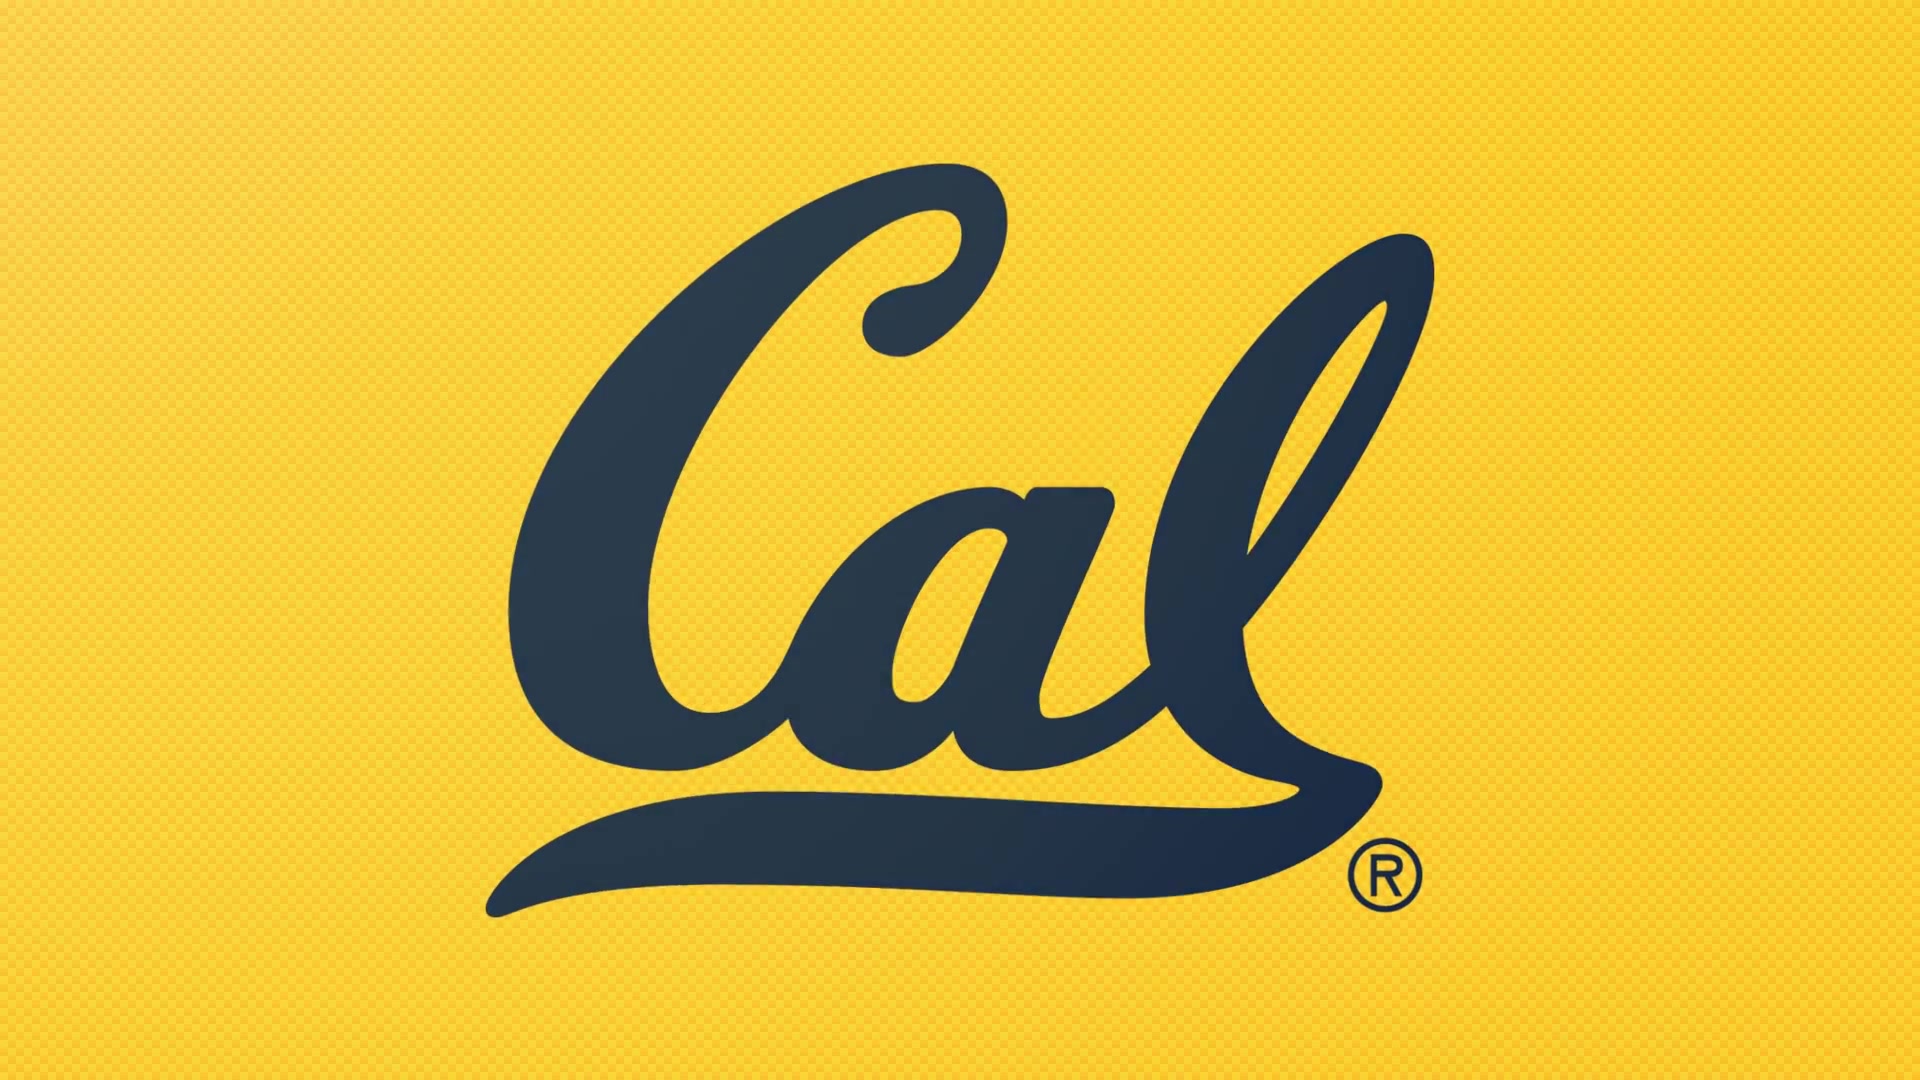 Cal Crew: 2015 Pac-12 Championships